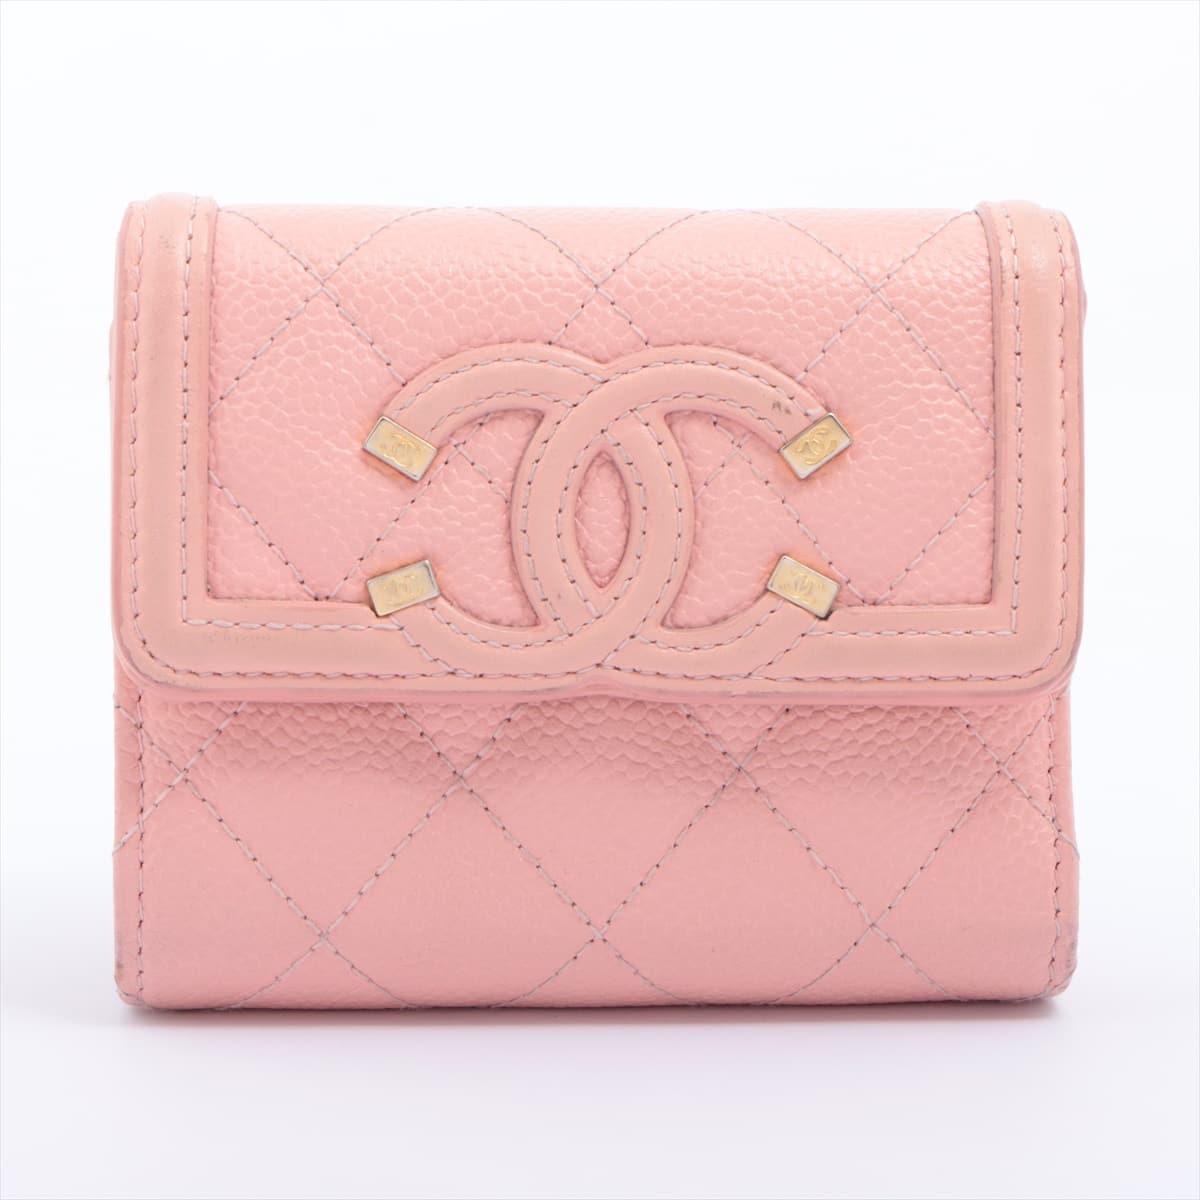 Chanel CC Filigree Caviarskin Wallet Pink Gold Metal fittings 27th